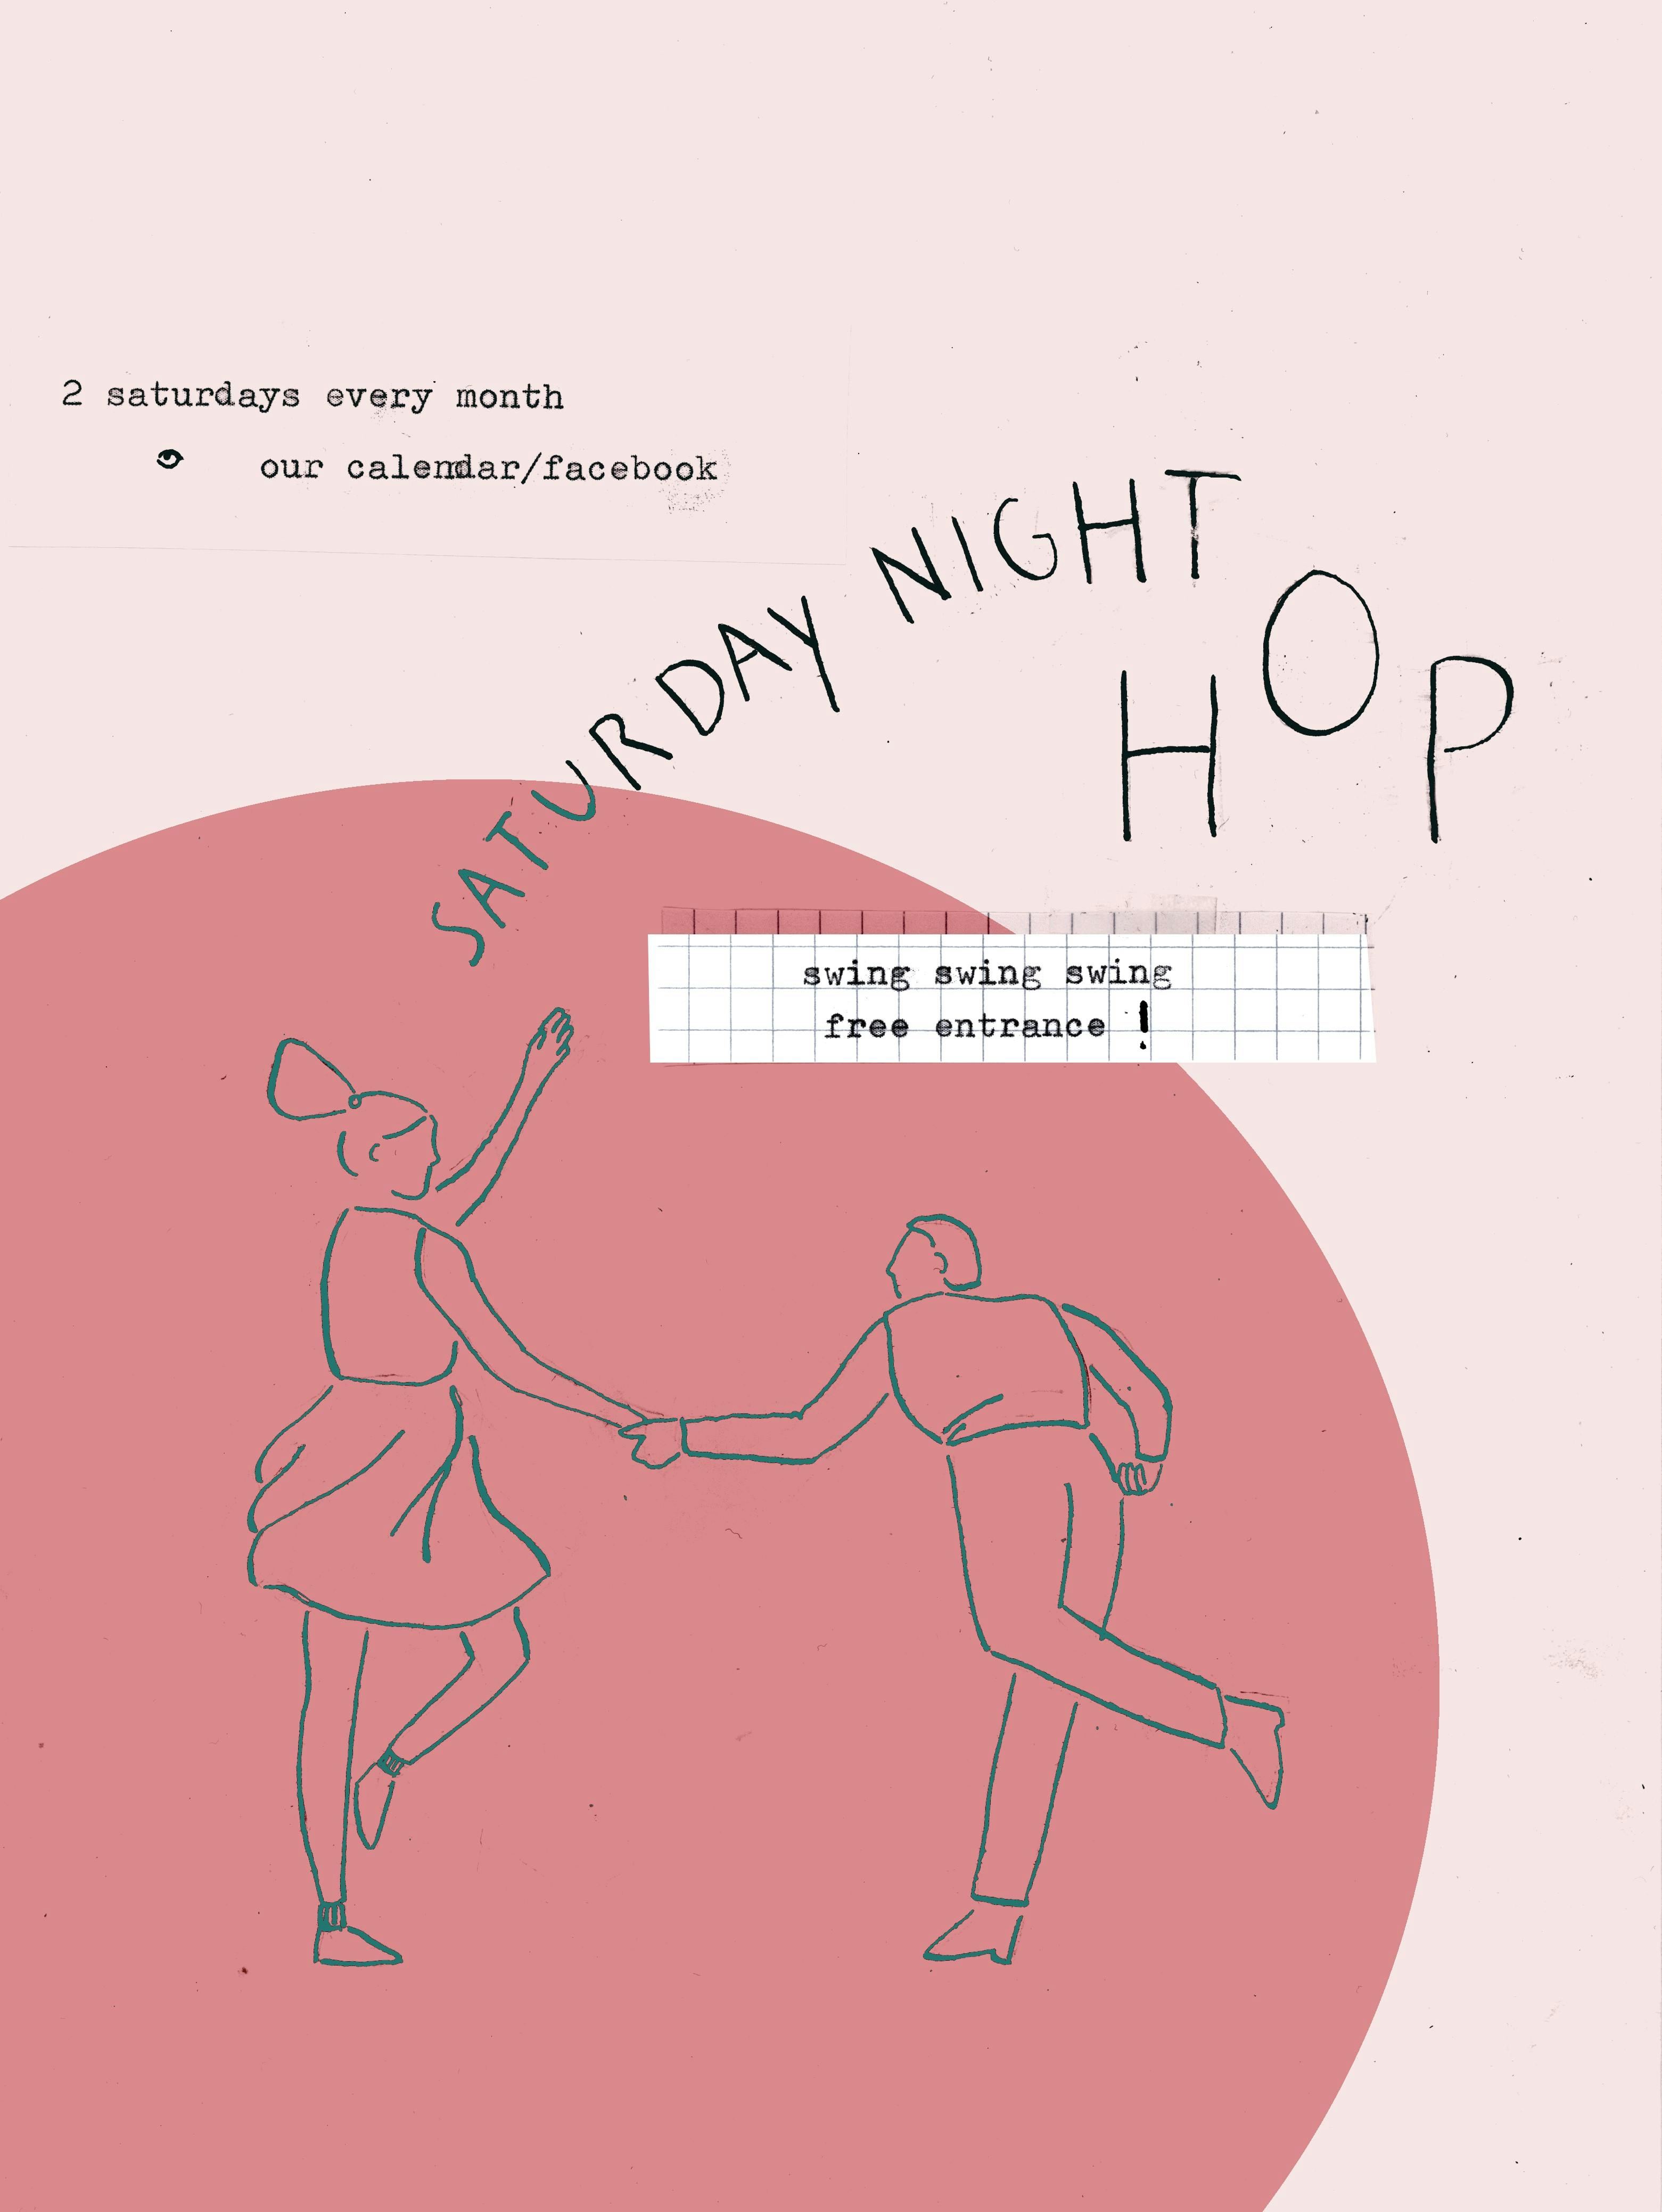 Saturday Night Hop